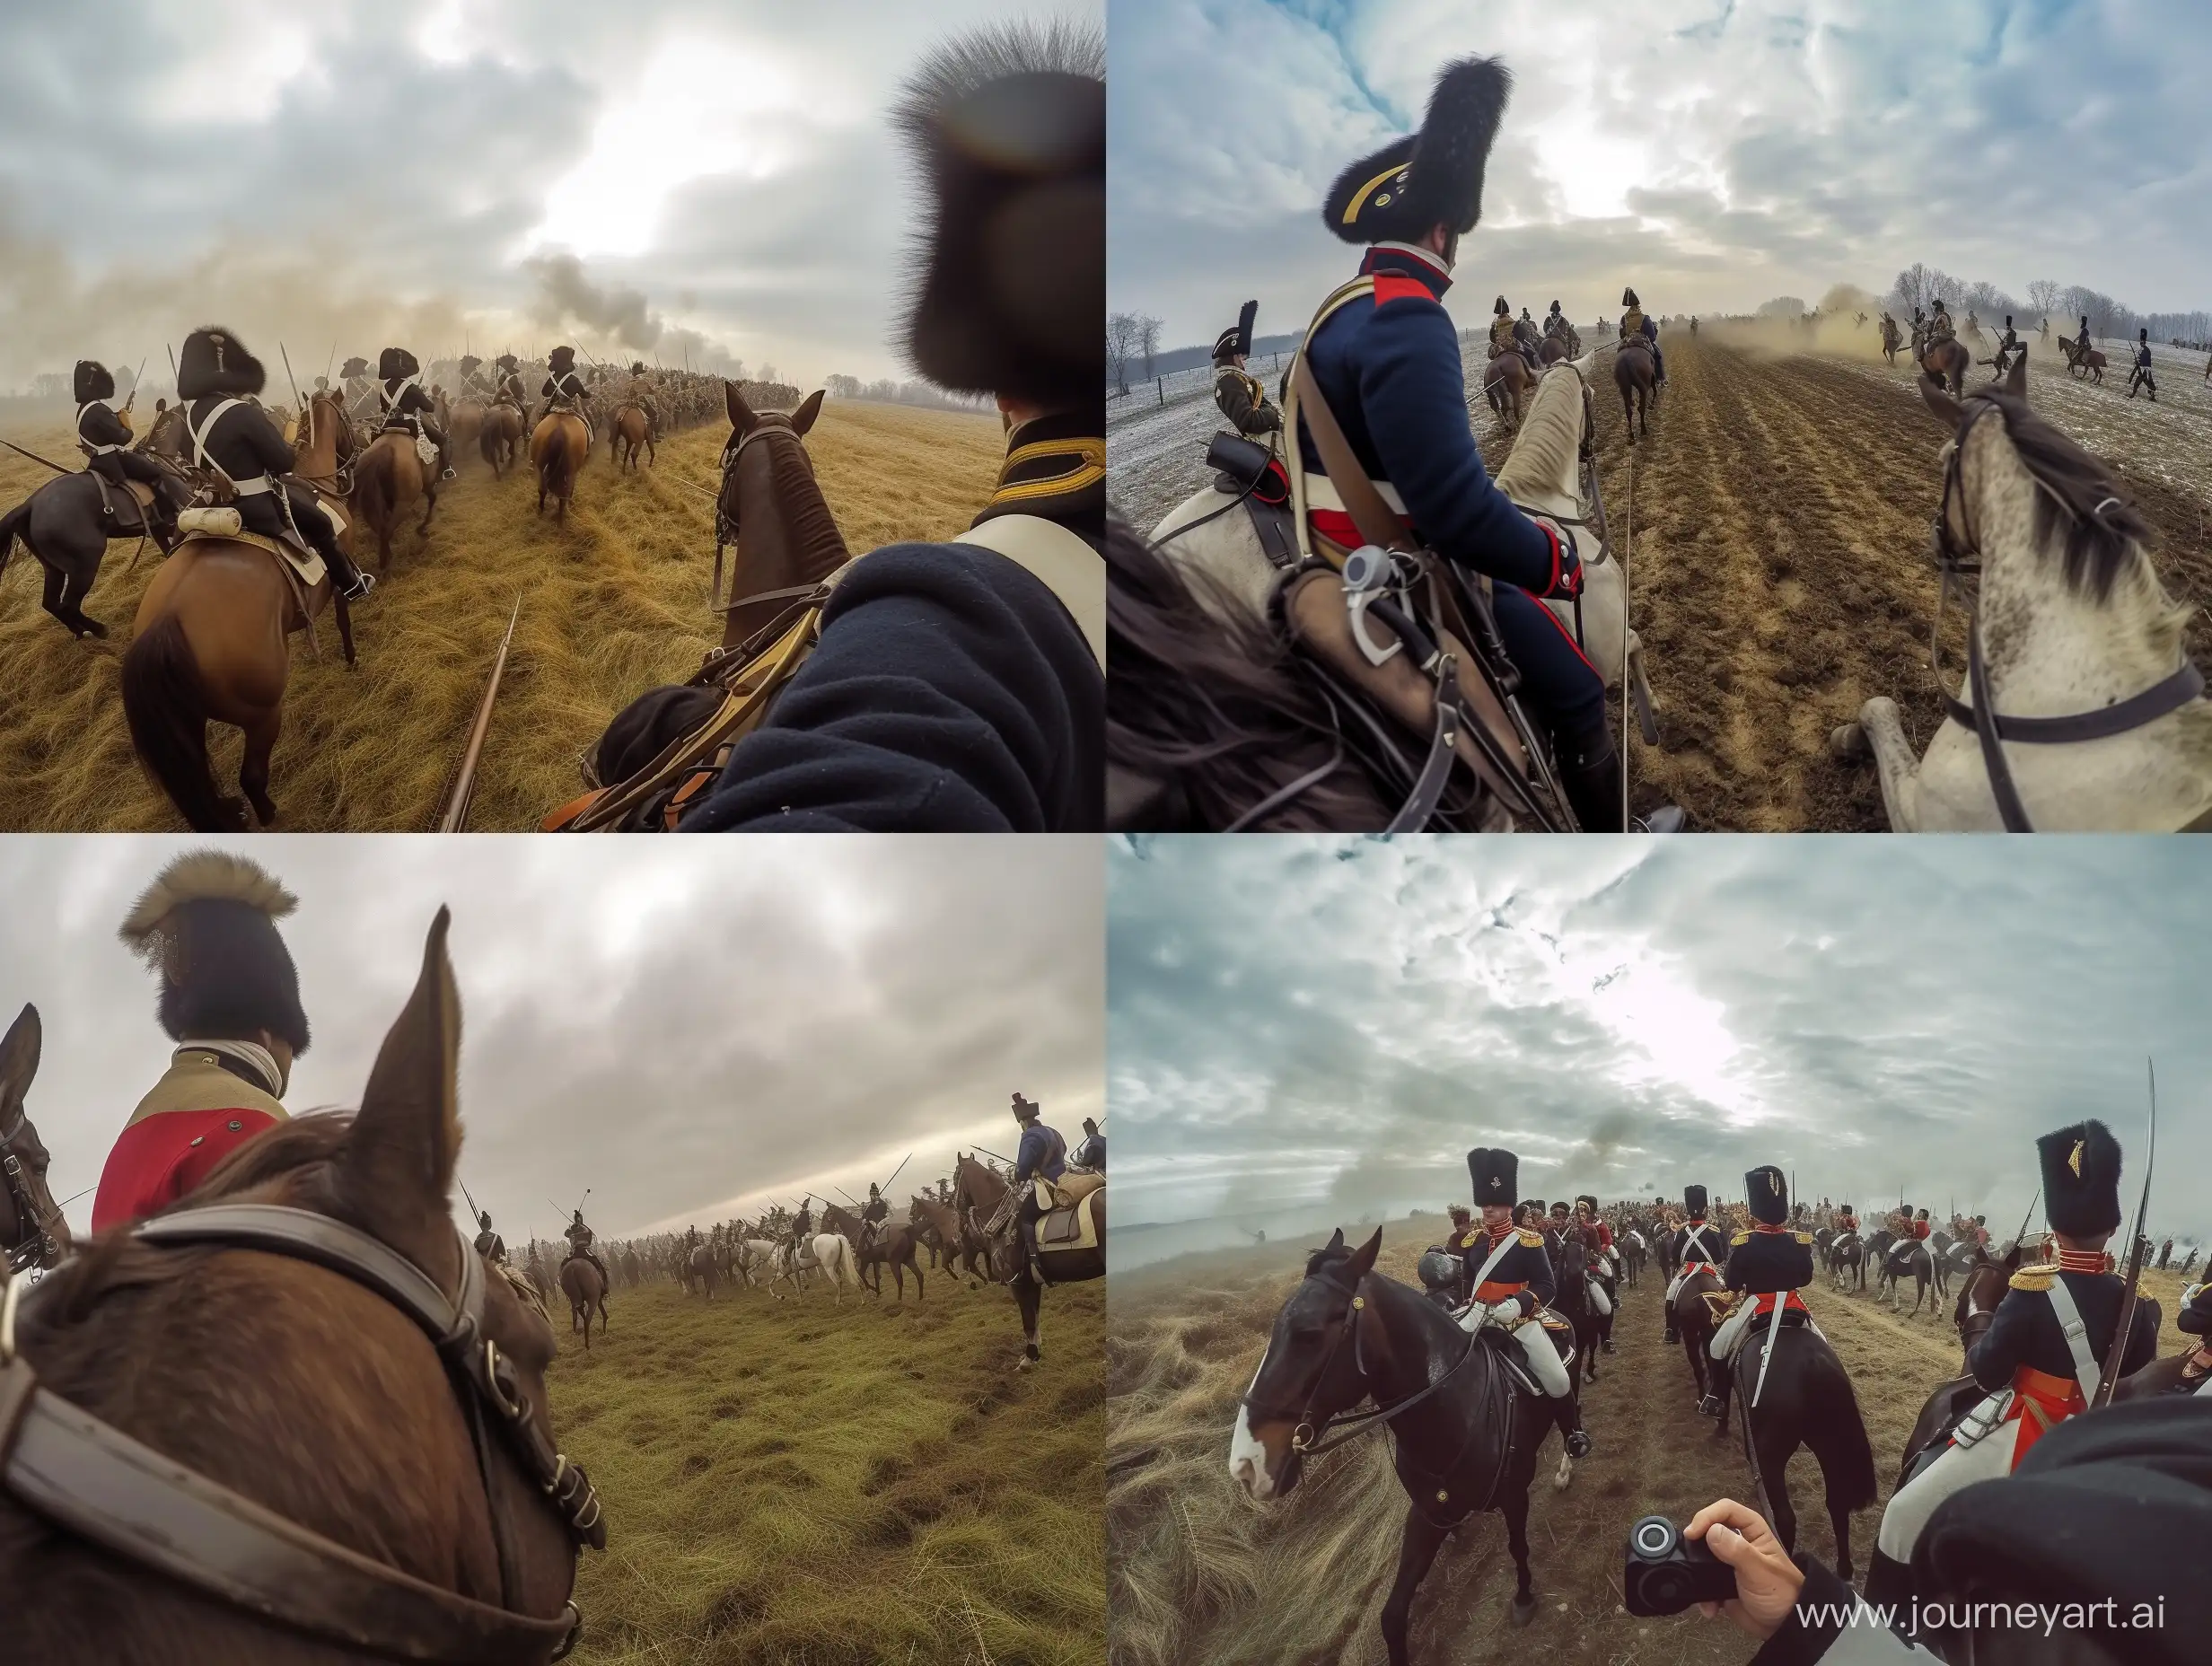 gopro footage of the battle of austerlitz, pov